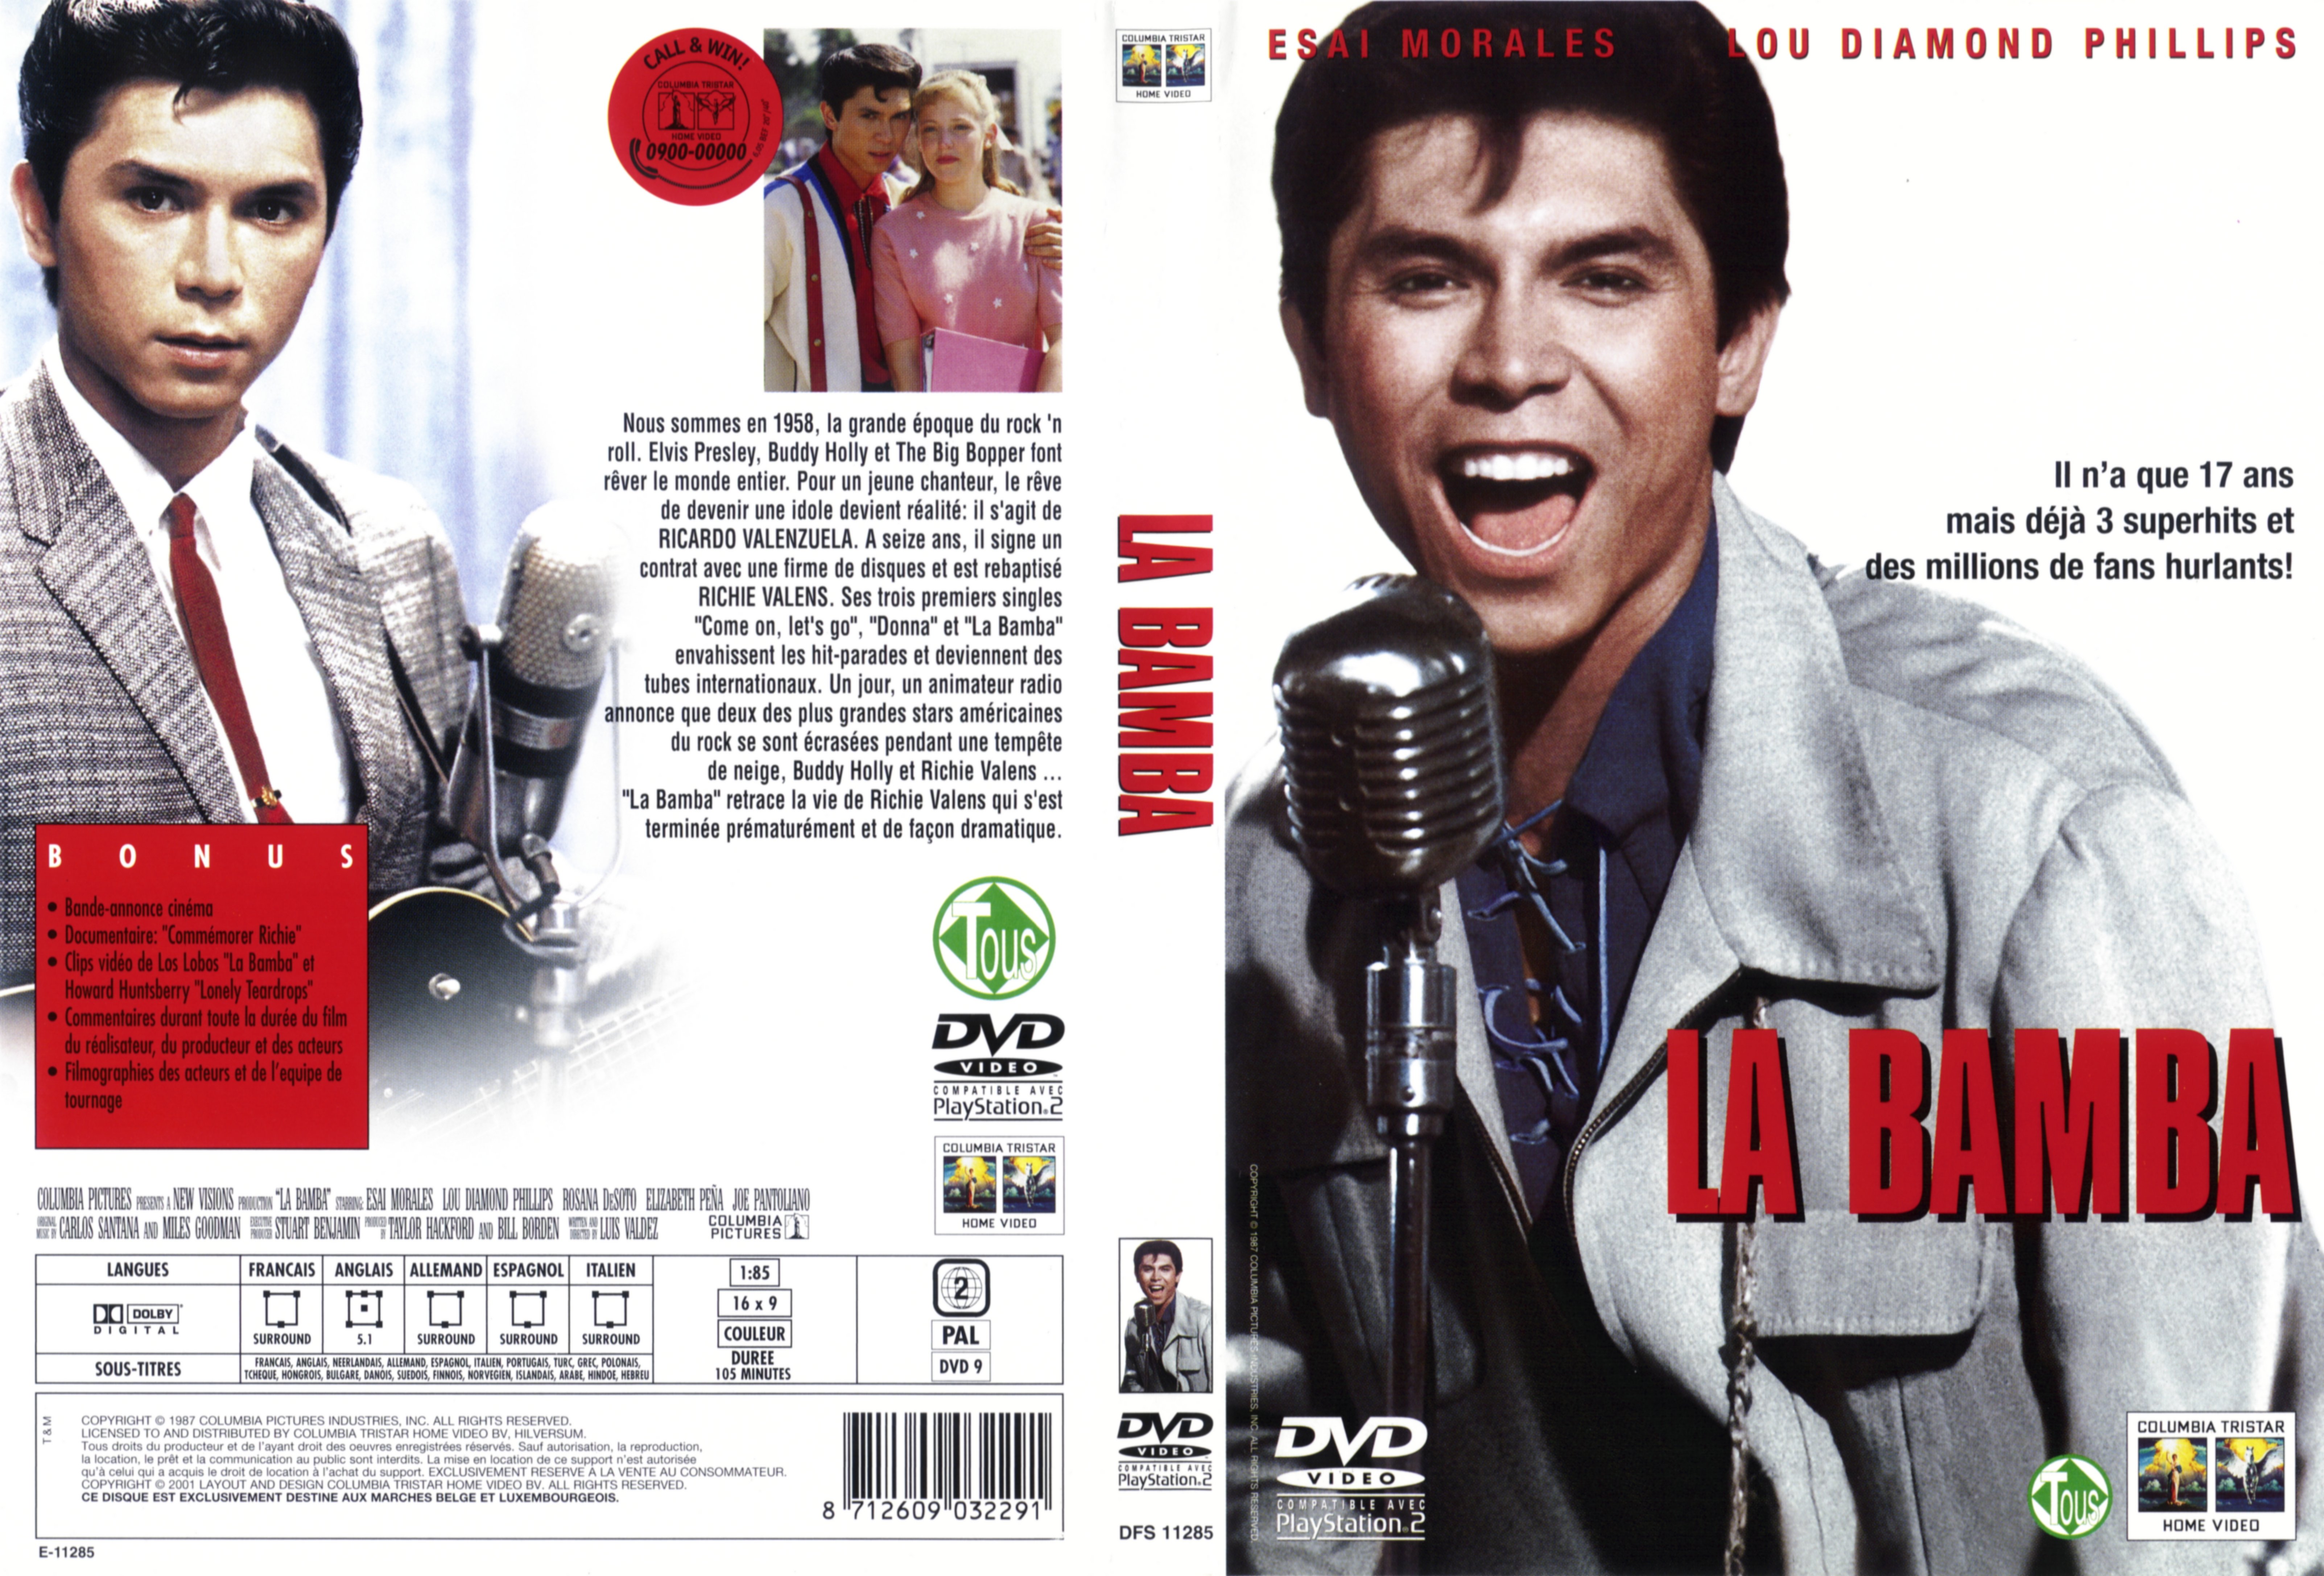 Jaquette DVD La bamba